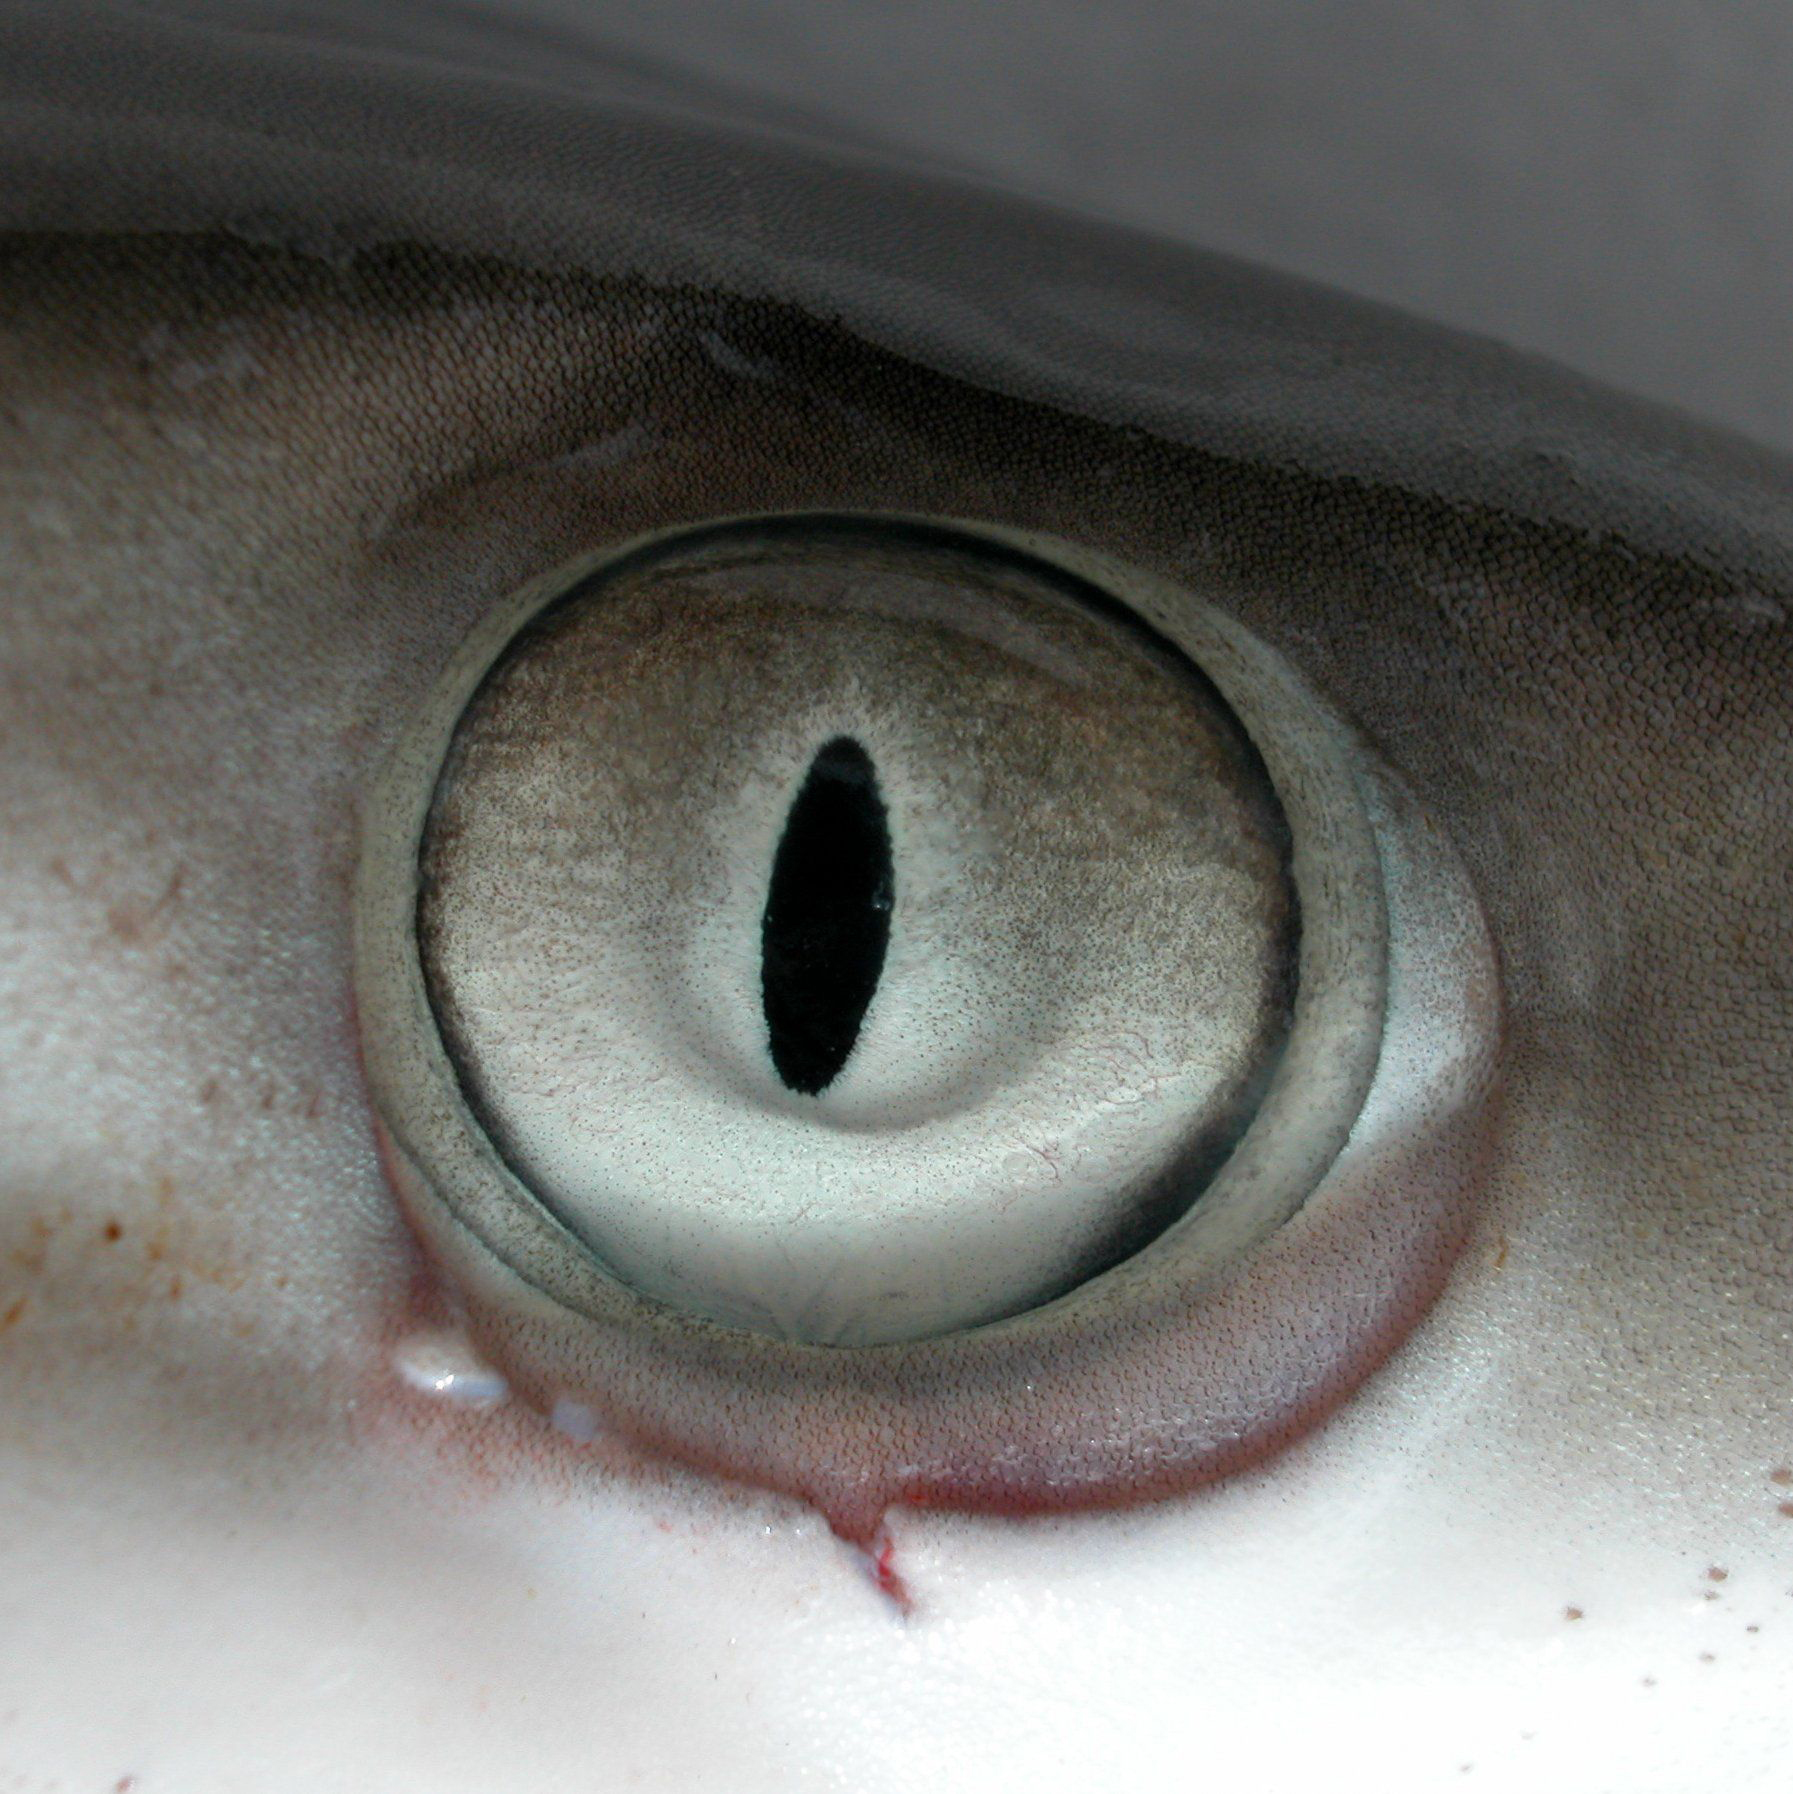 Shark-eyes